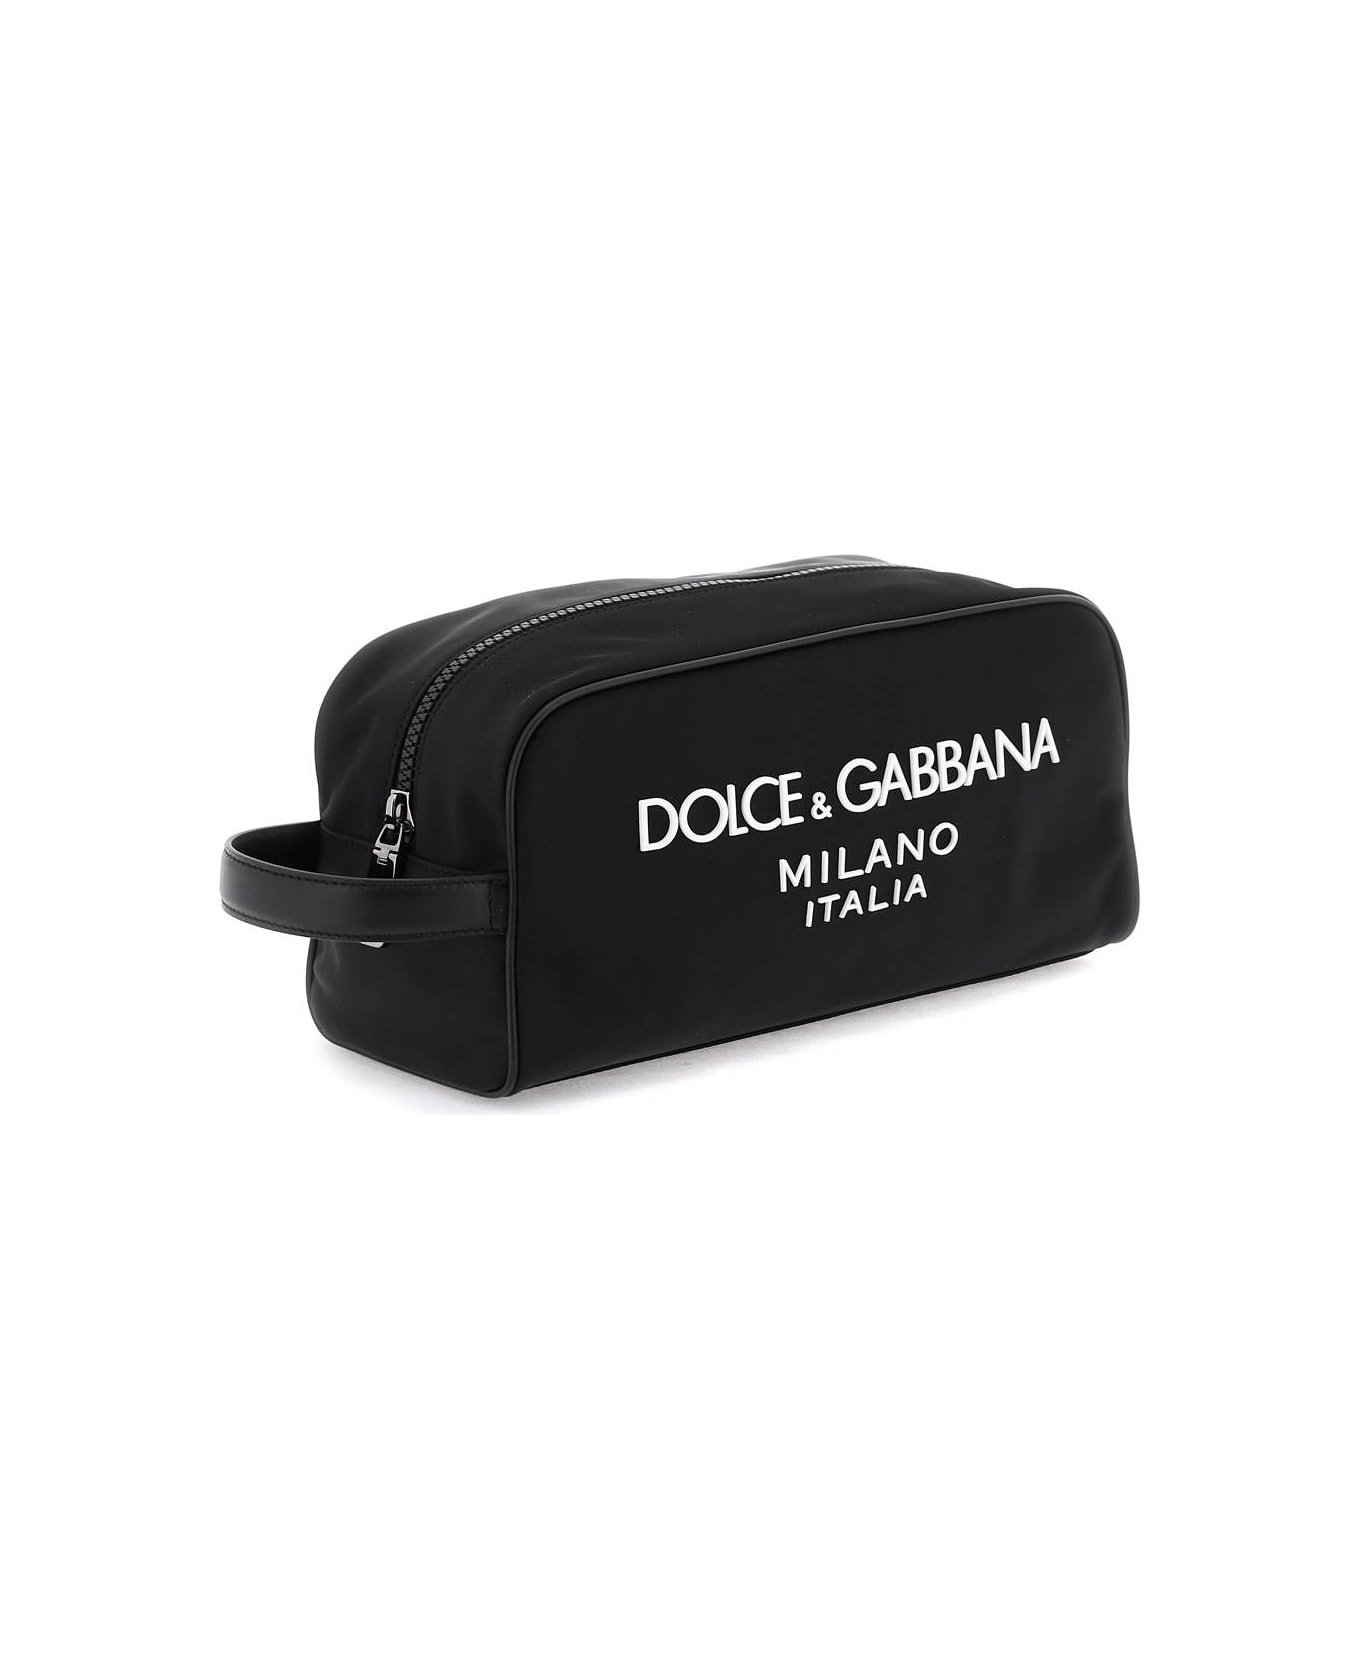 Dolce & Gabbana Nylon Cosmetic Bag - Nero/nero